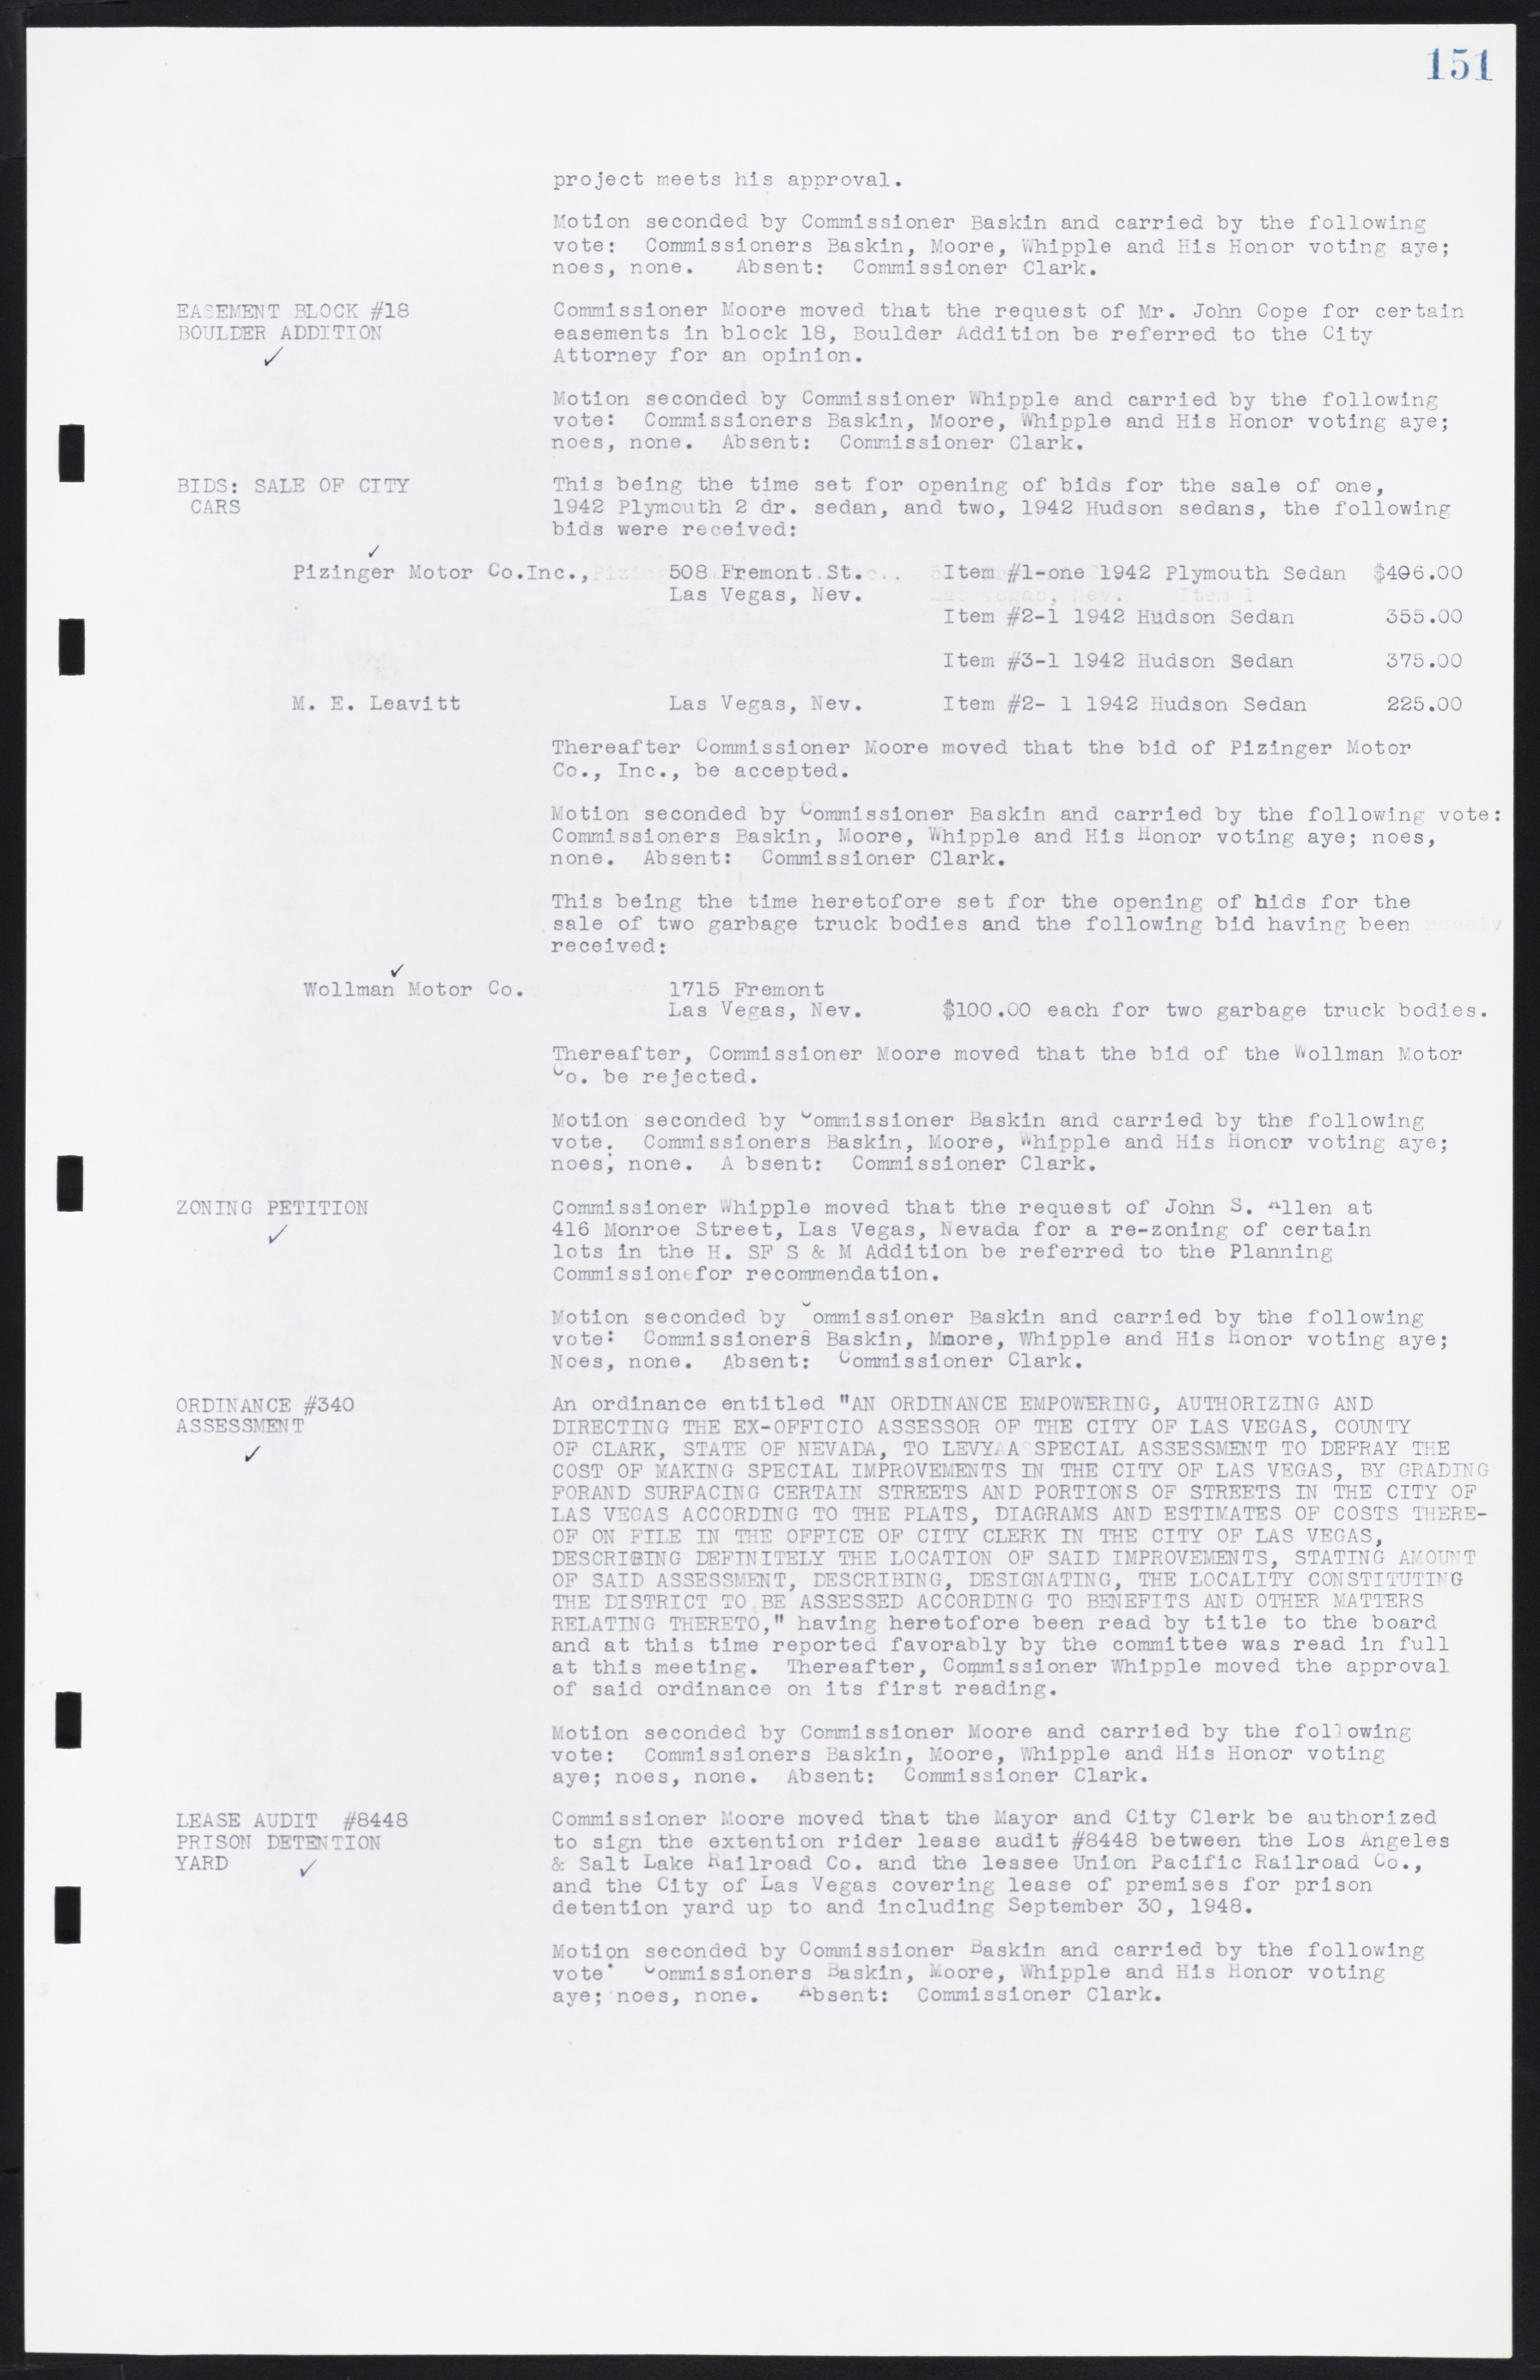 Las Vegas City Commission Minutes, January 7, 1947 to October 26, 1949, lvc000006-170